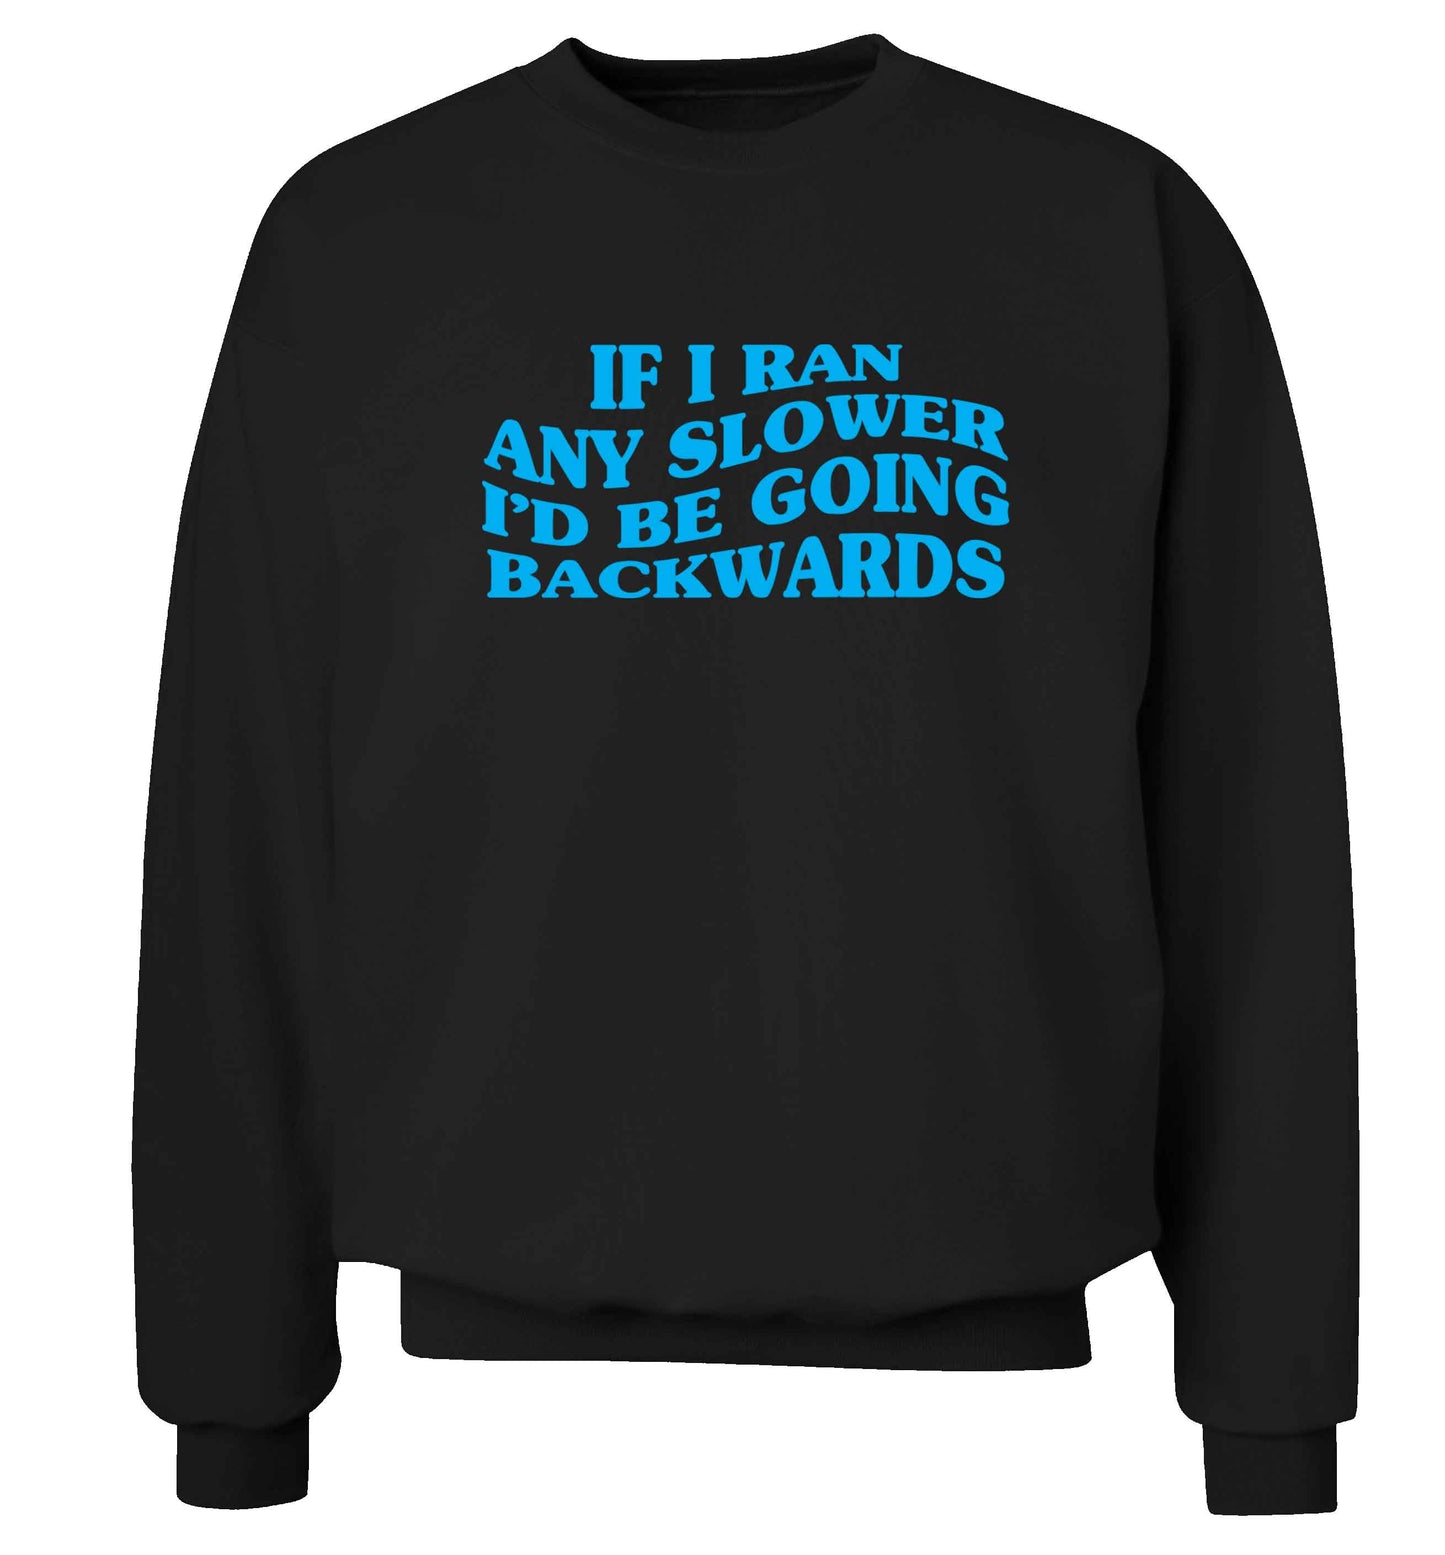 If I ran any slower I'd be going backwards adult's unisex black sweater 2XL